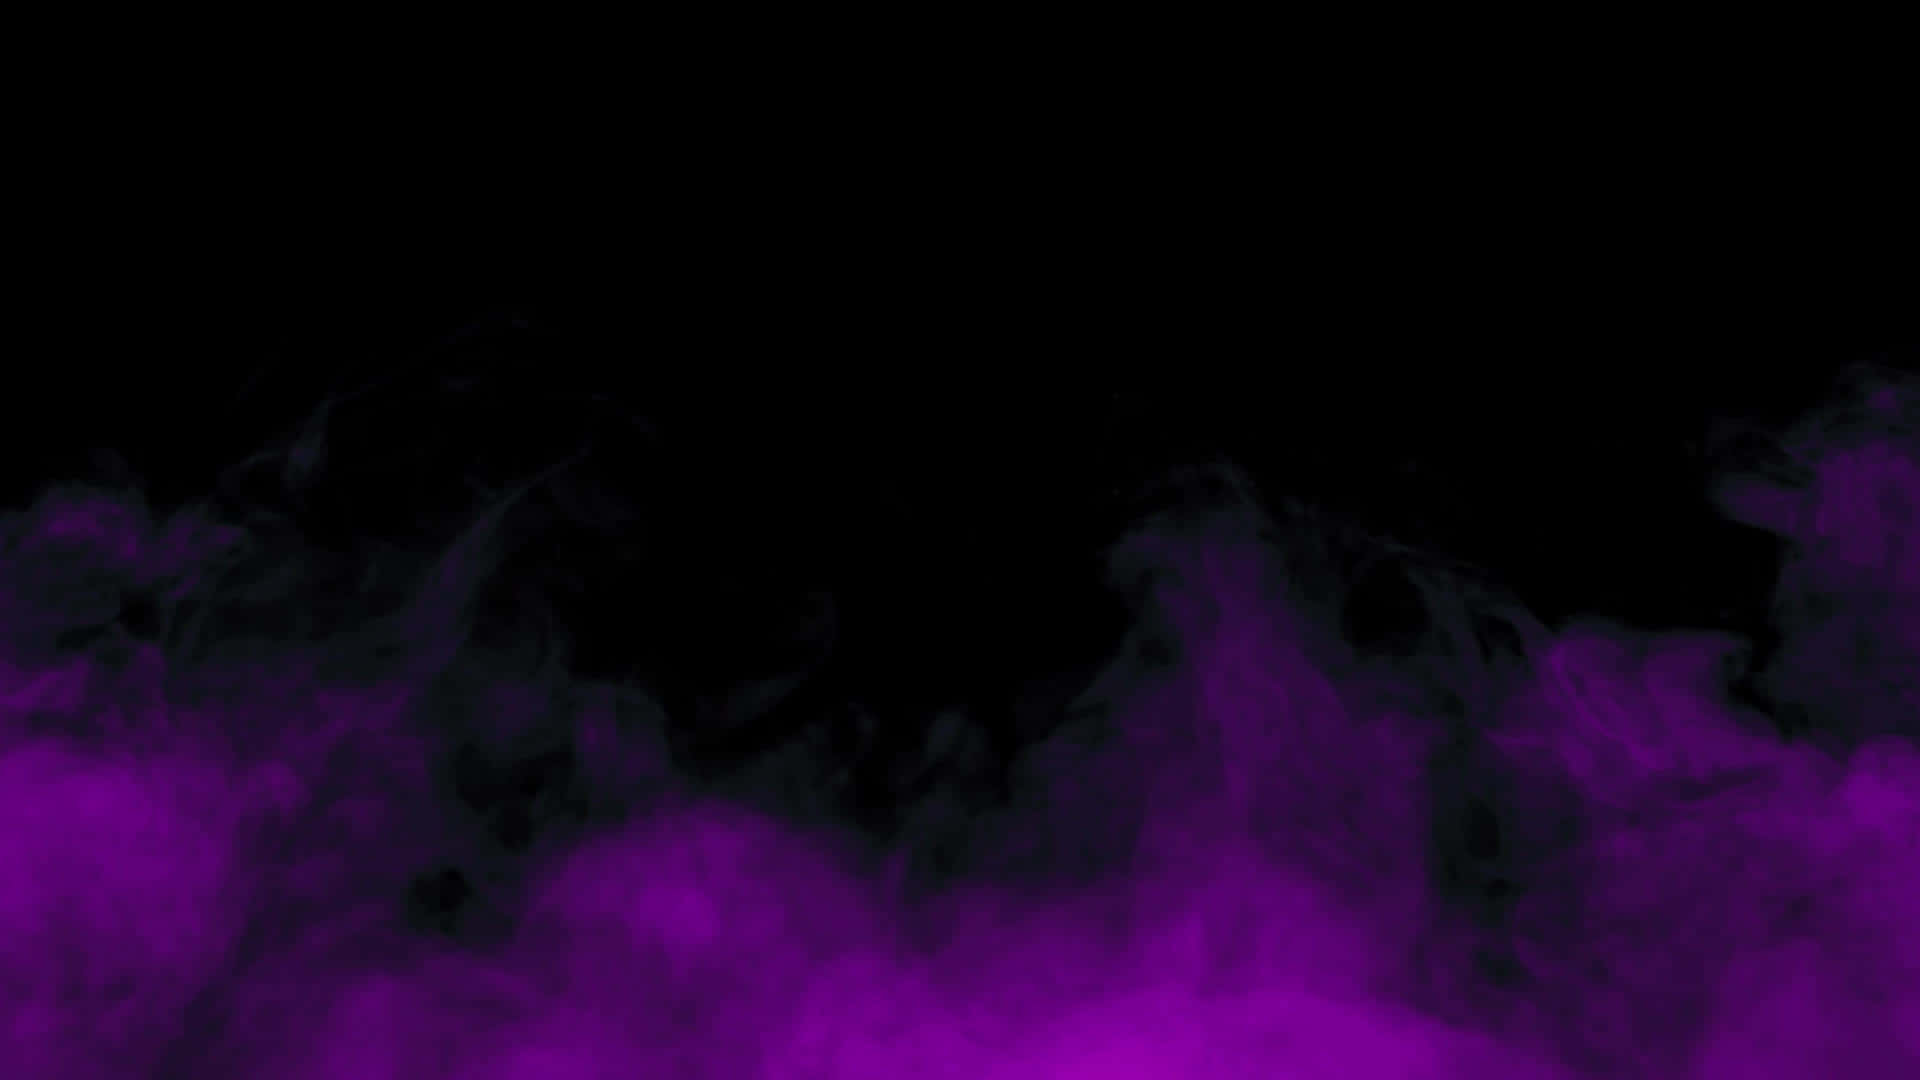 An ombre pattern of wispy purple smoke against a black background